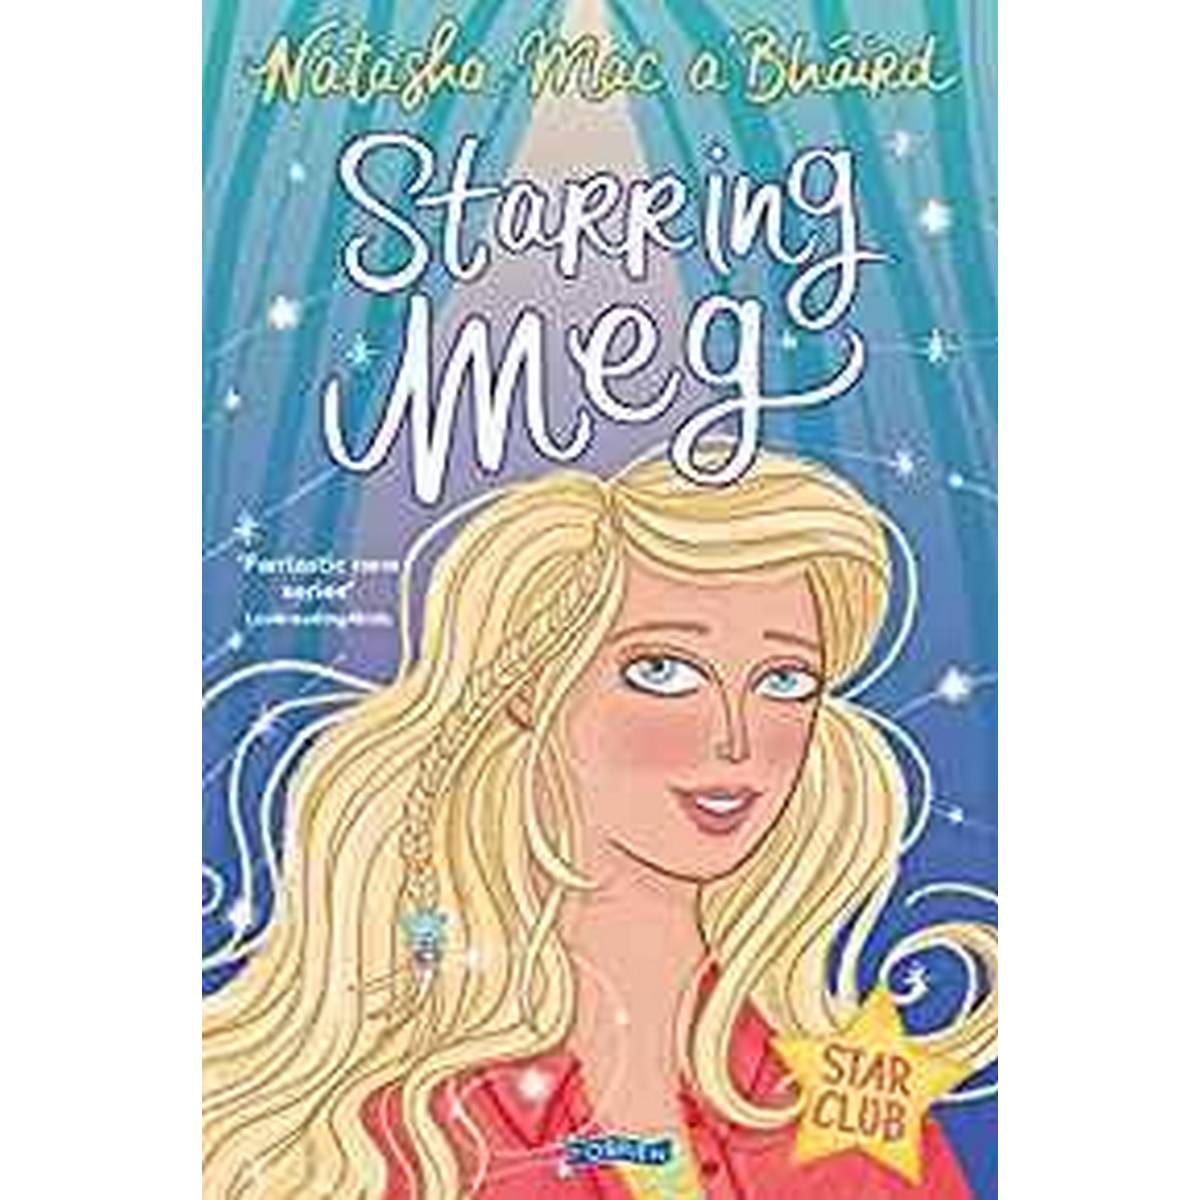 Starring Meg: Star Club Book 2